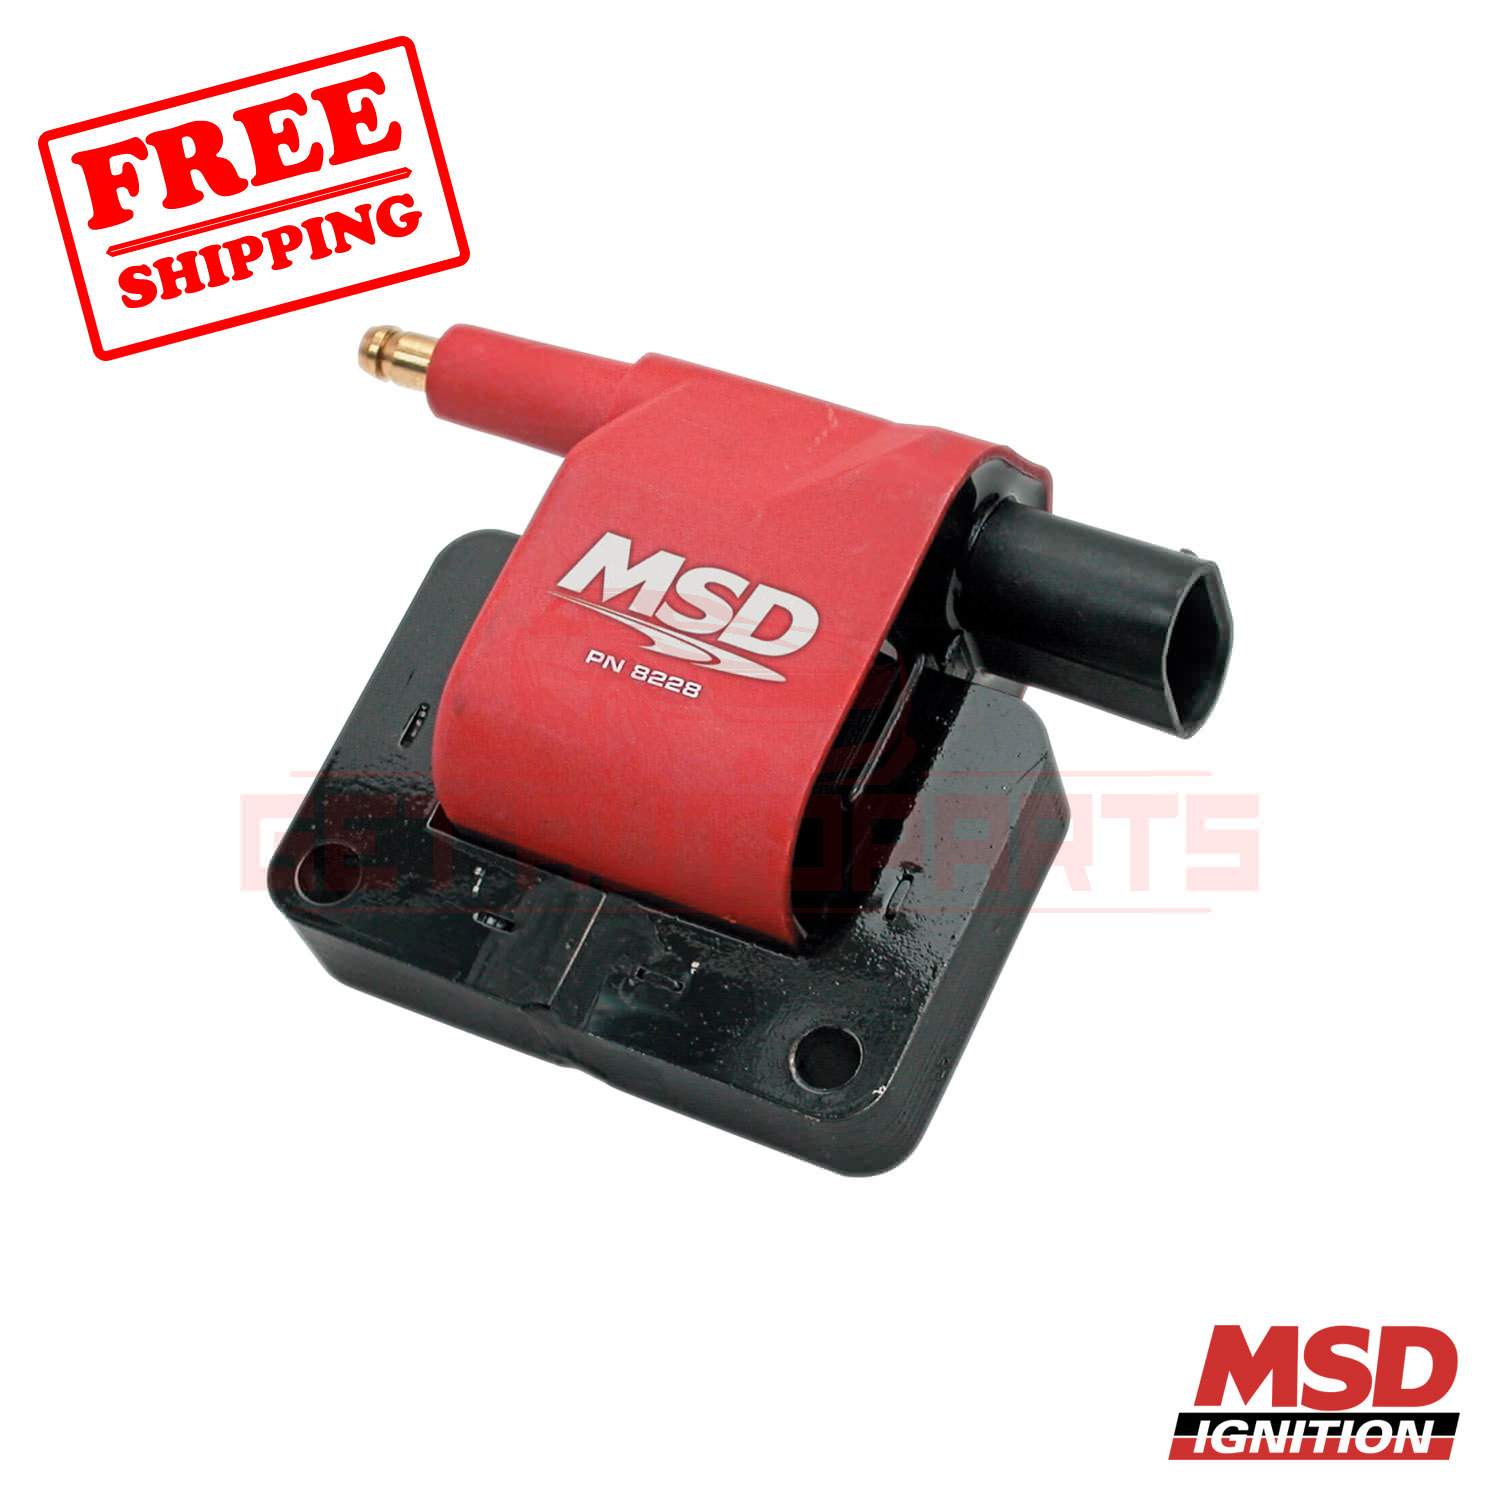 MSD Ignition Coil for Jeep Wrangler 1992-1995 657896156948 | eBay